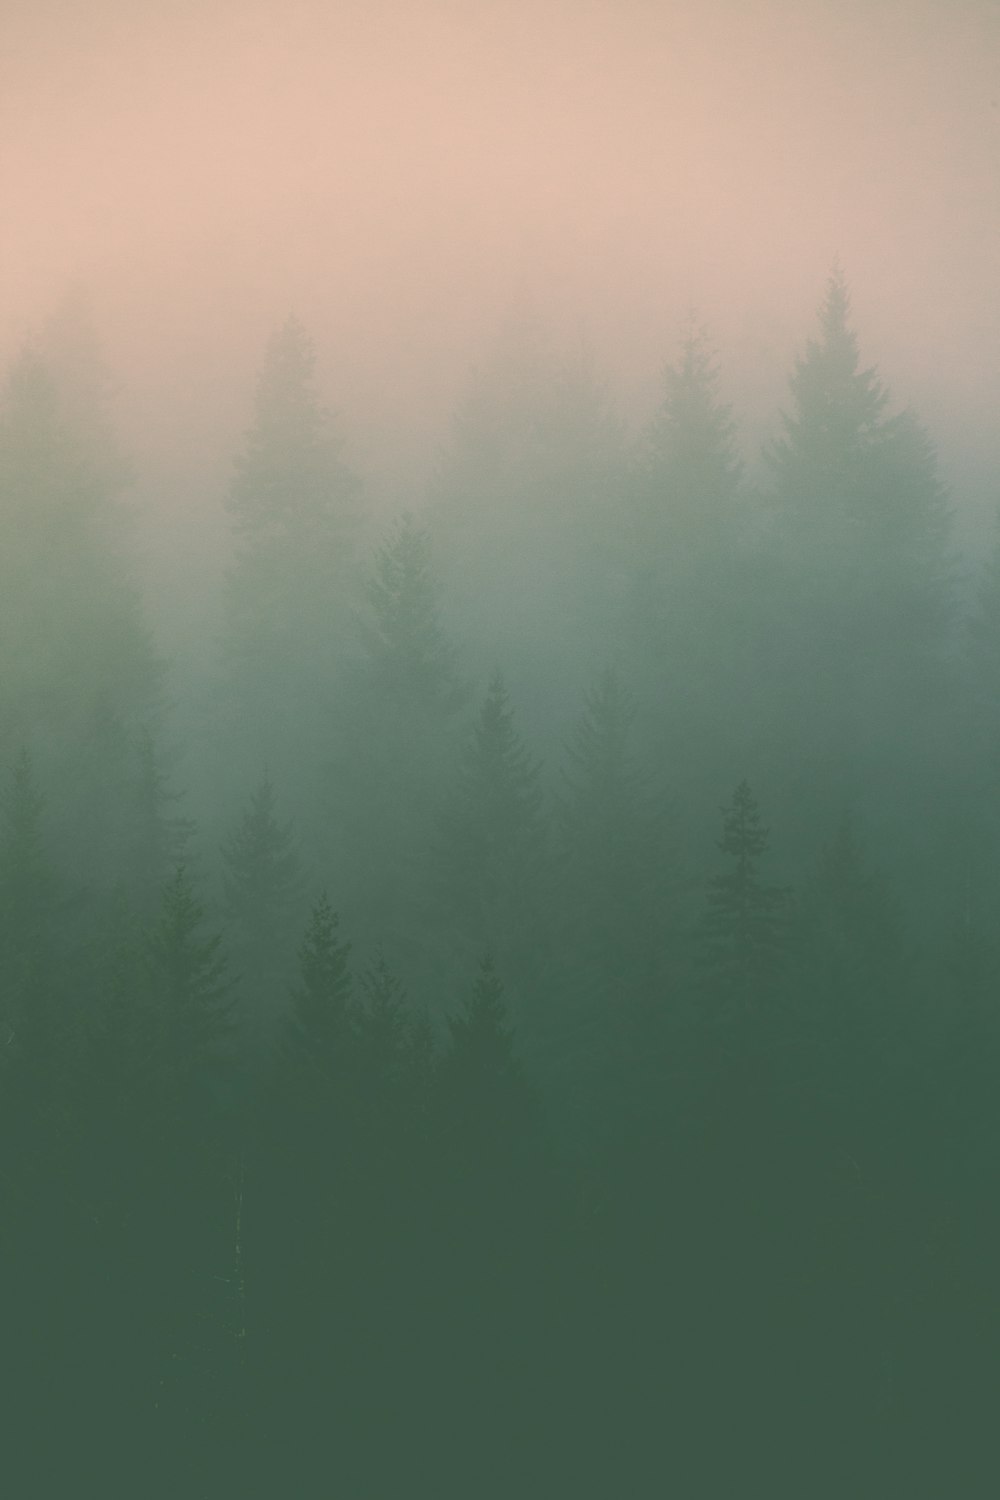 pins verts couverts de brouillard